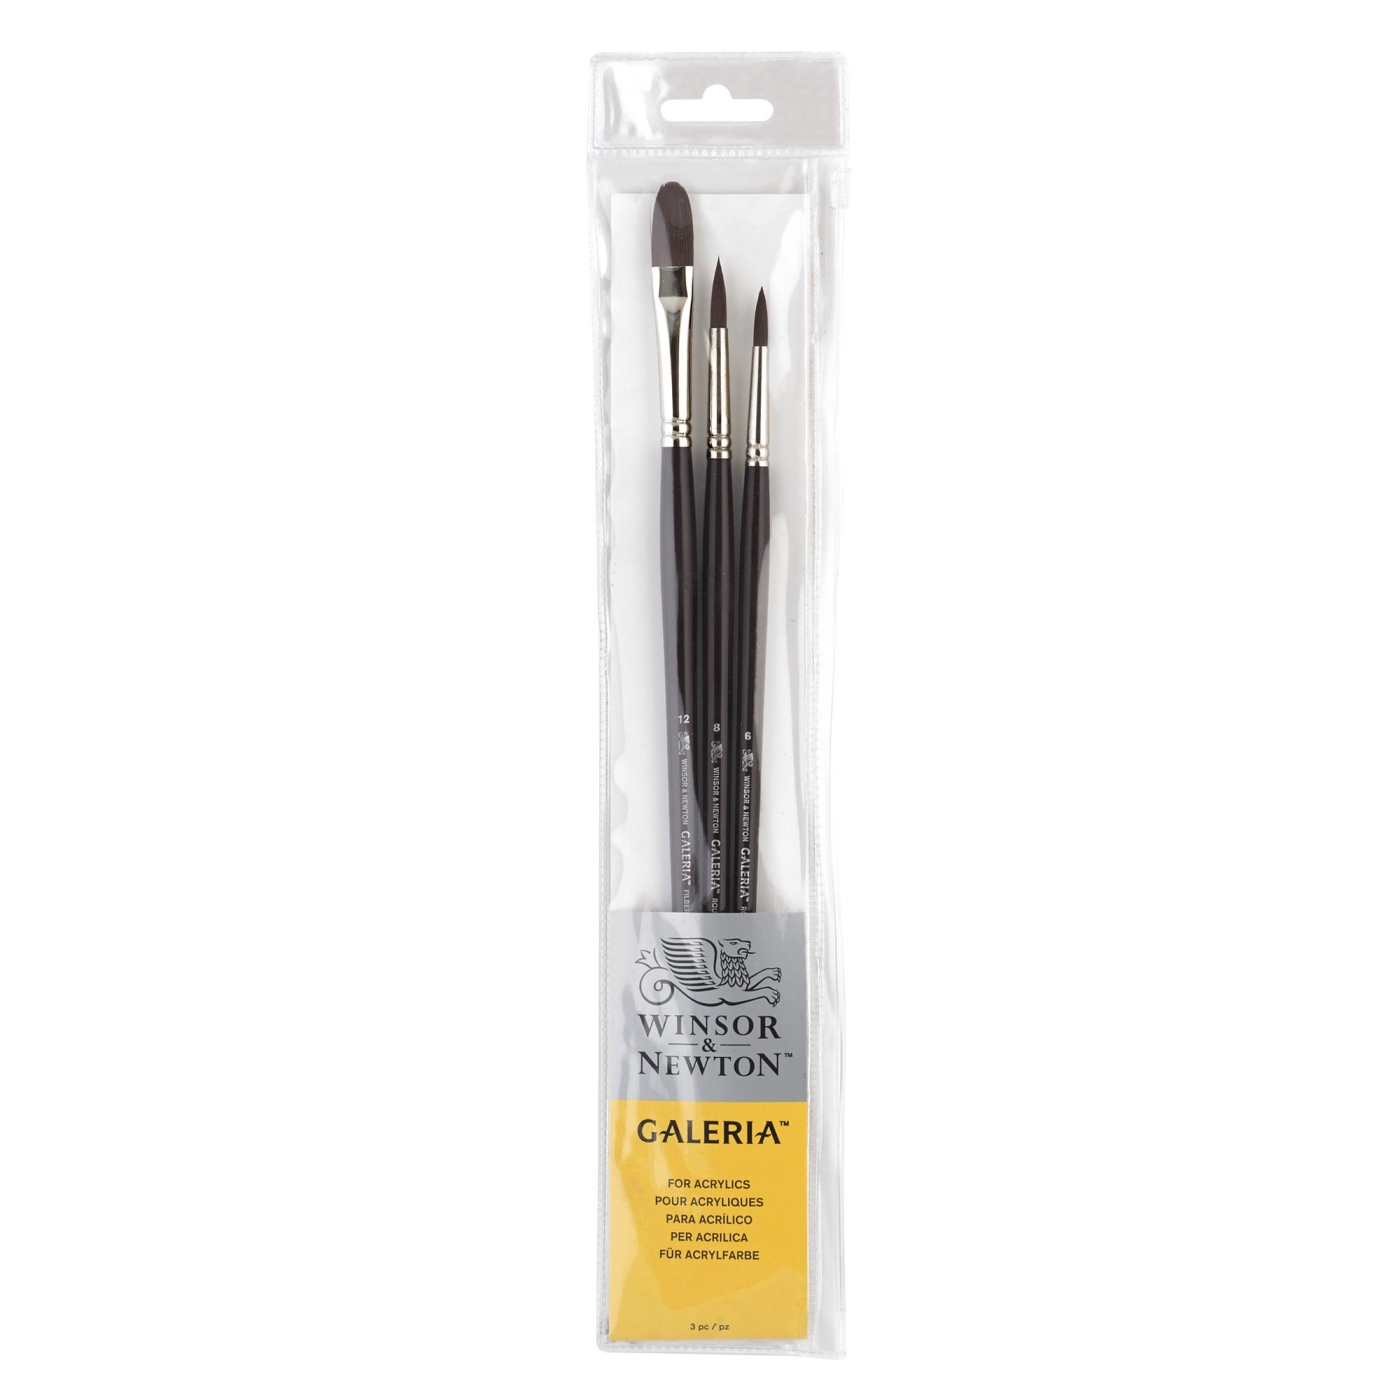 Winsor & Newton Galeria Brush Round/Long Handle 3-set